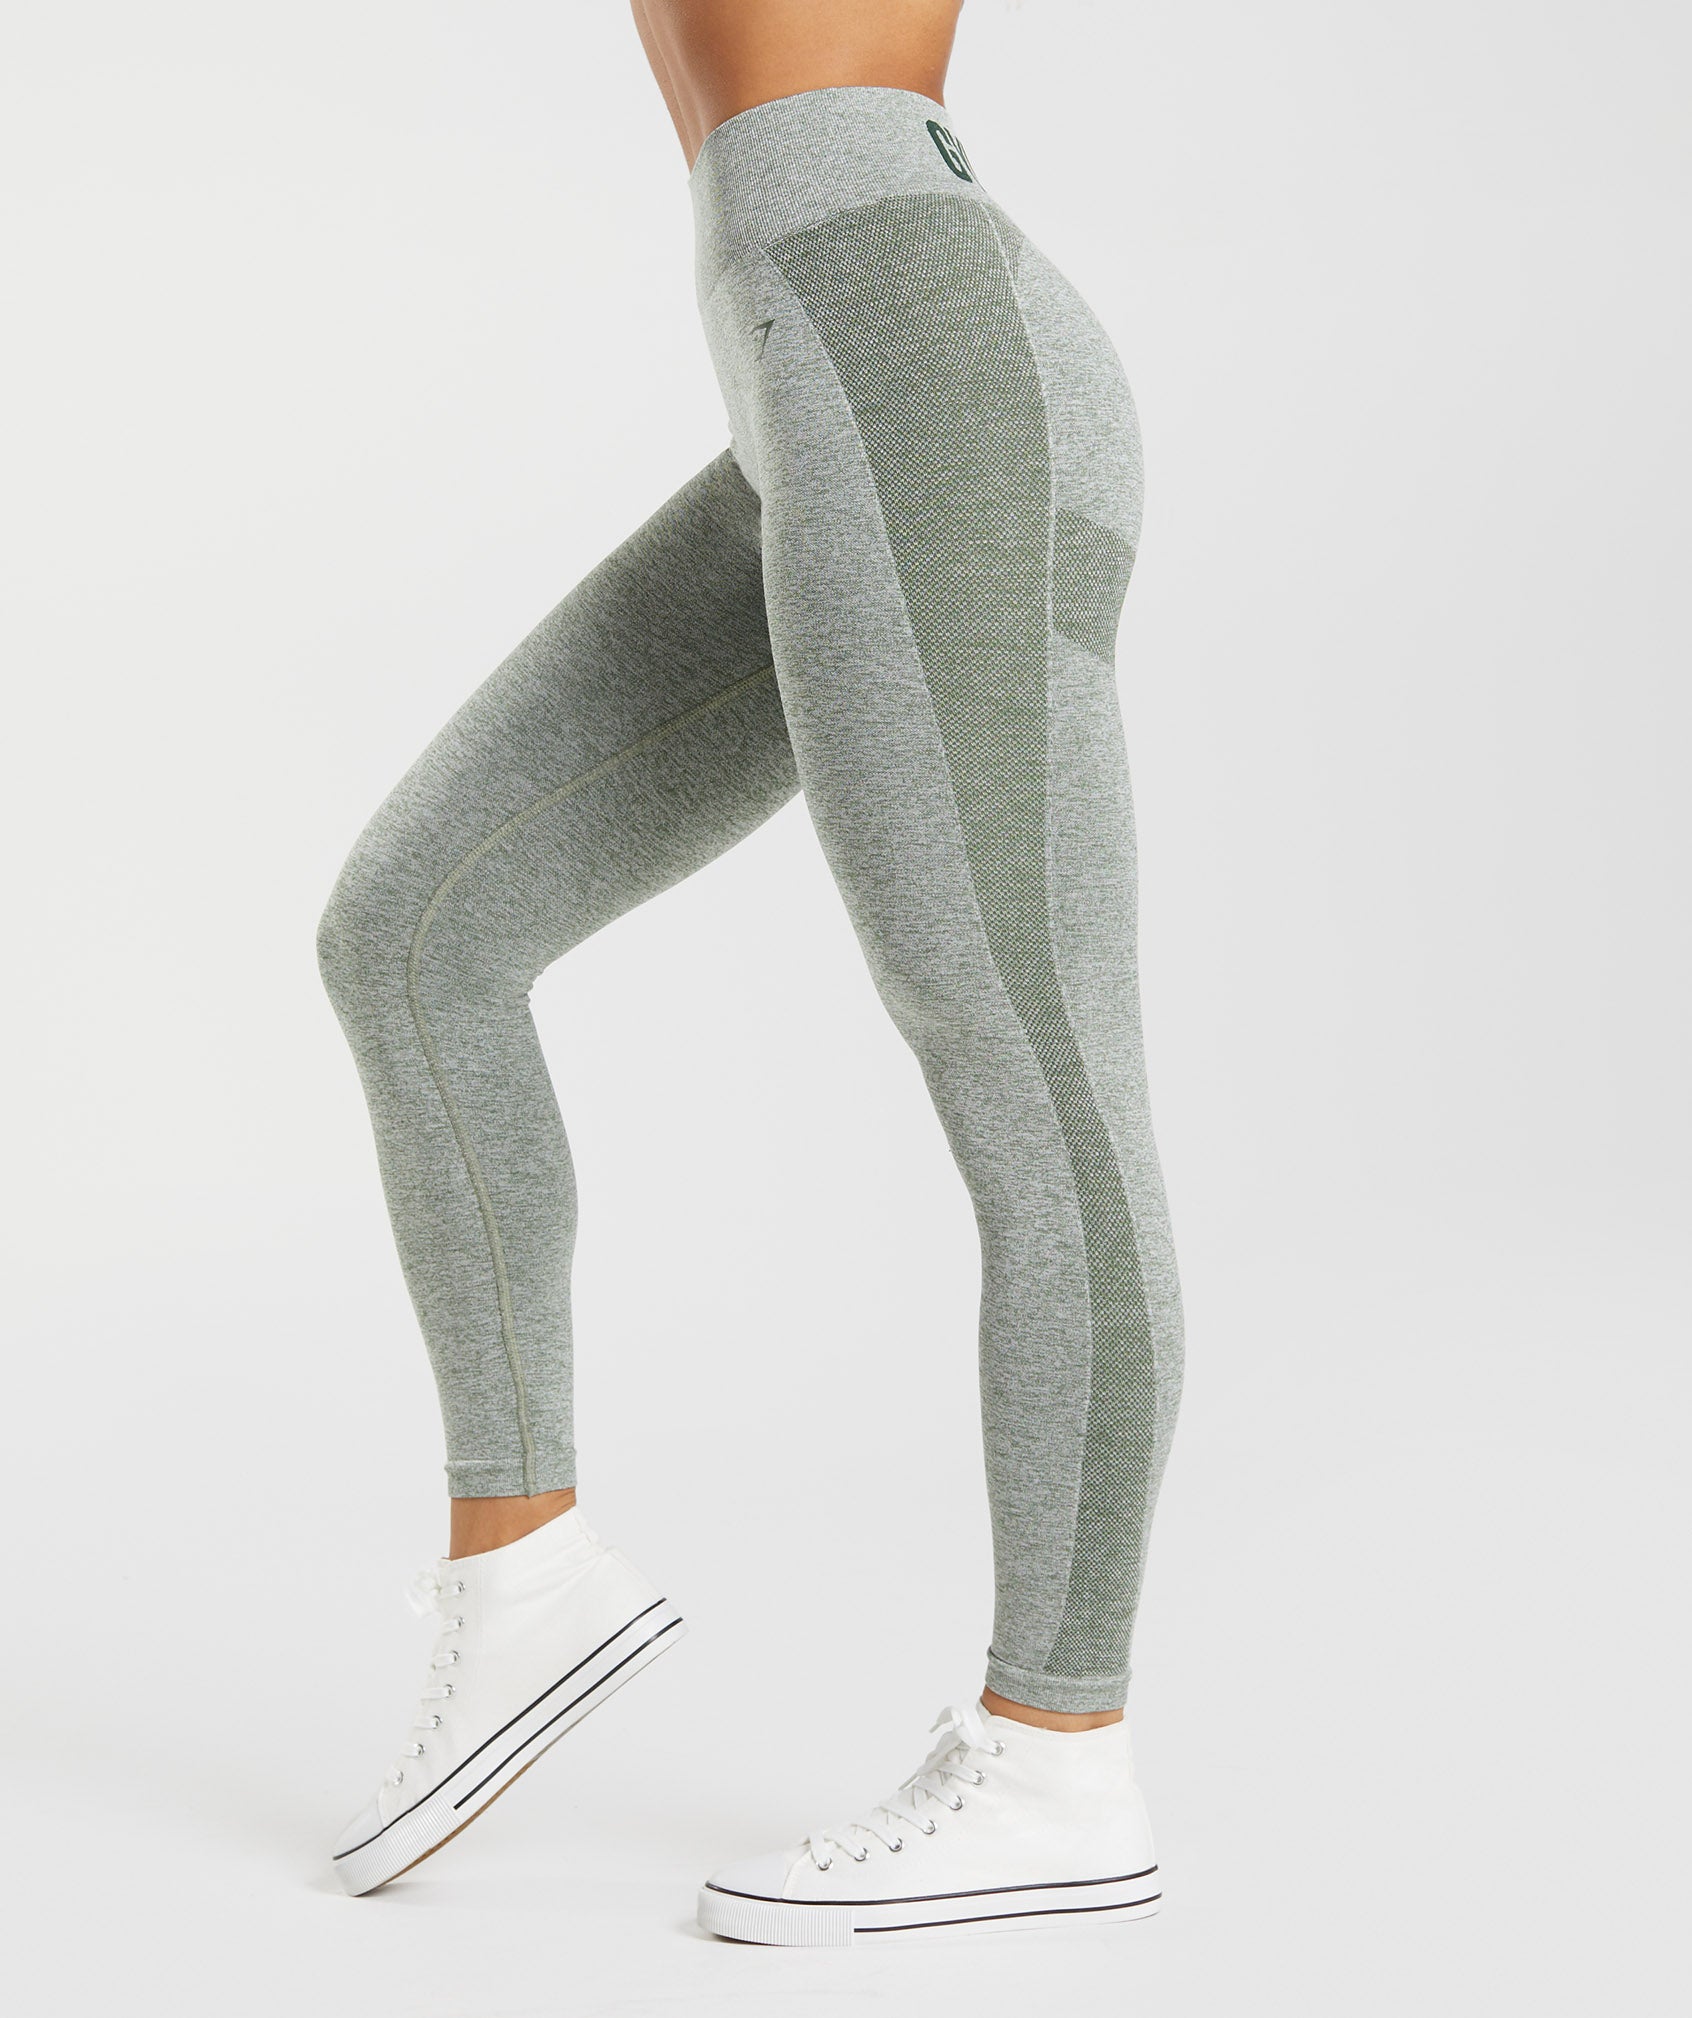 Gymshark Flex Leggings Green Size XS - $27 - From lauren